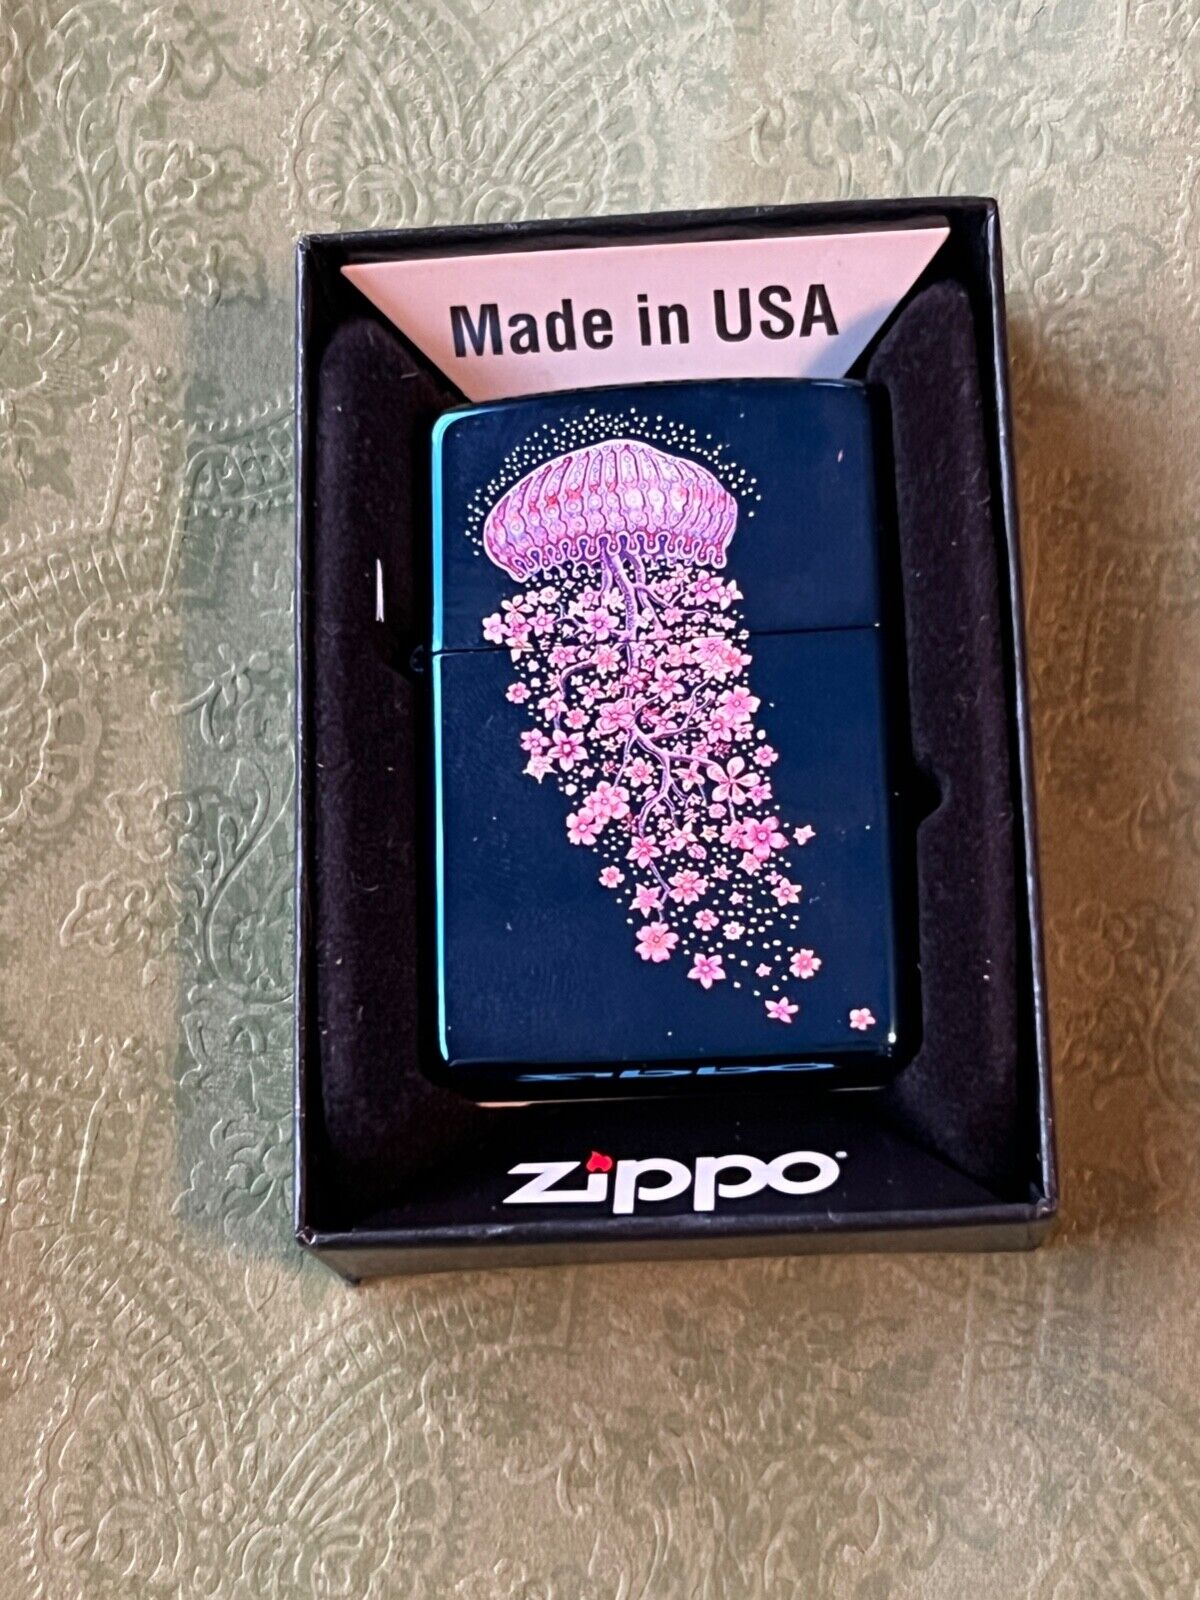 Emek Blue Jellyfish Zippo Lighter 053/100 in the world Never Used in Box